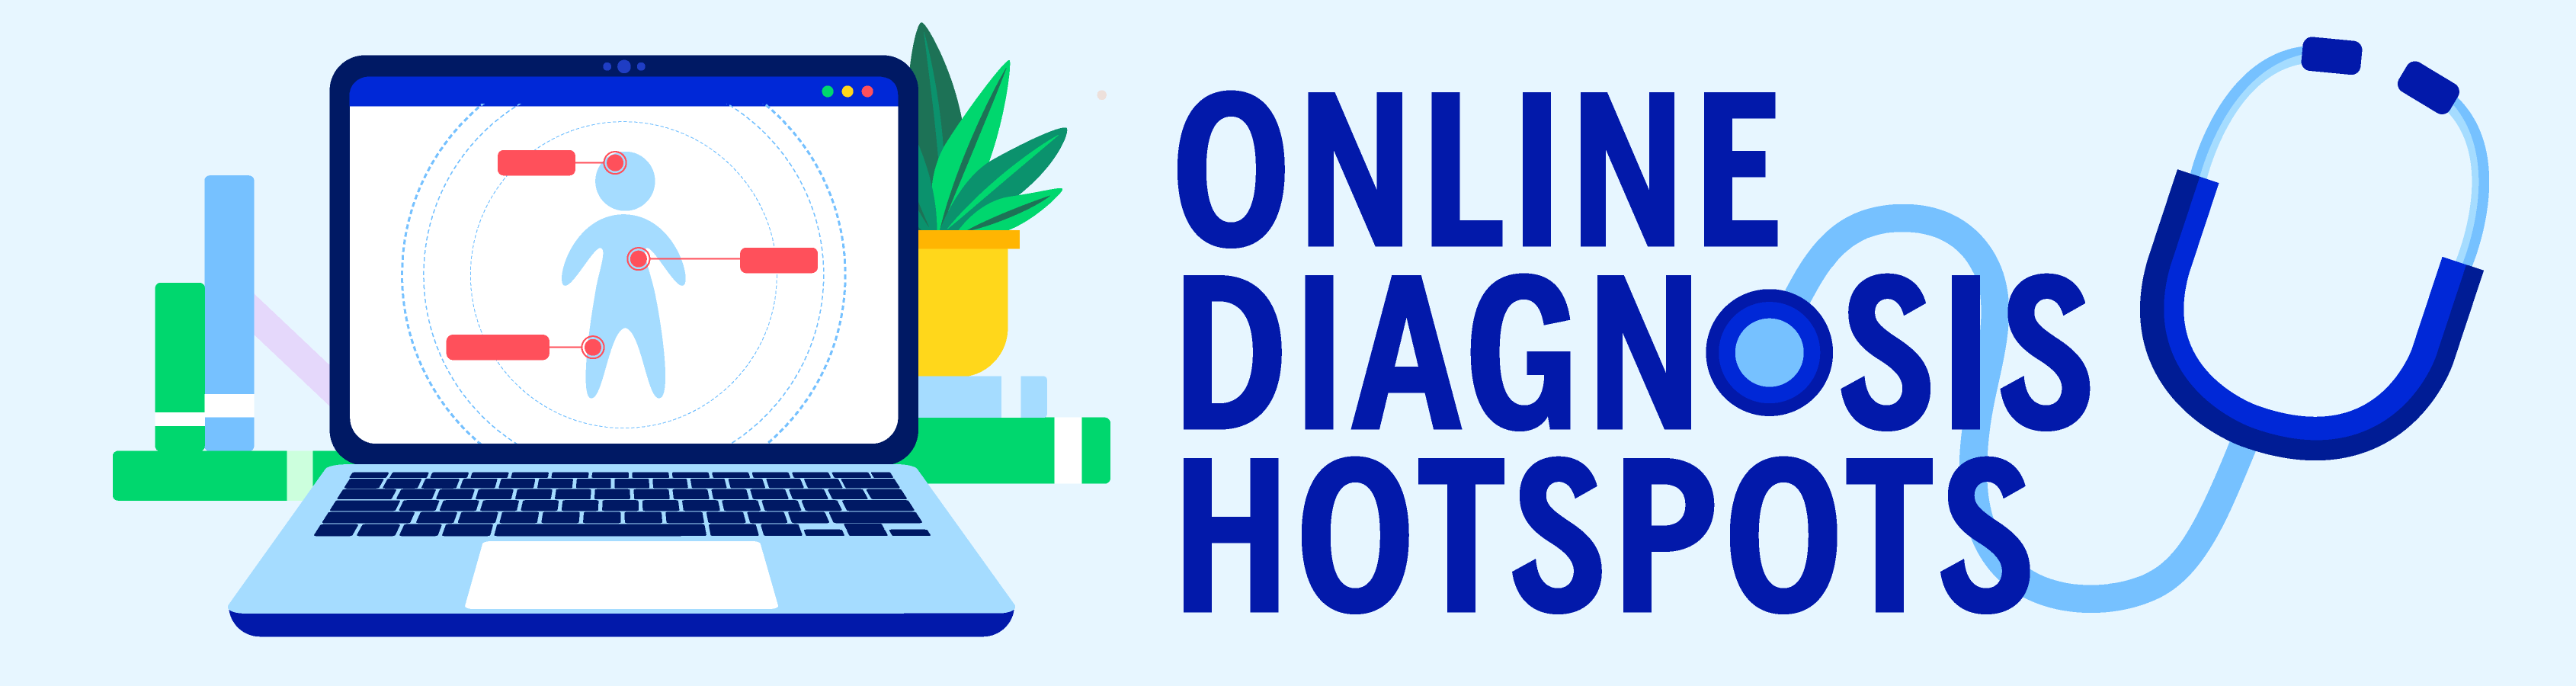 Online Diagnosis Hotspots Header Image